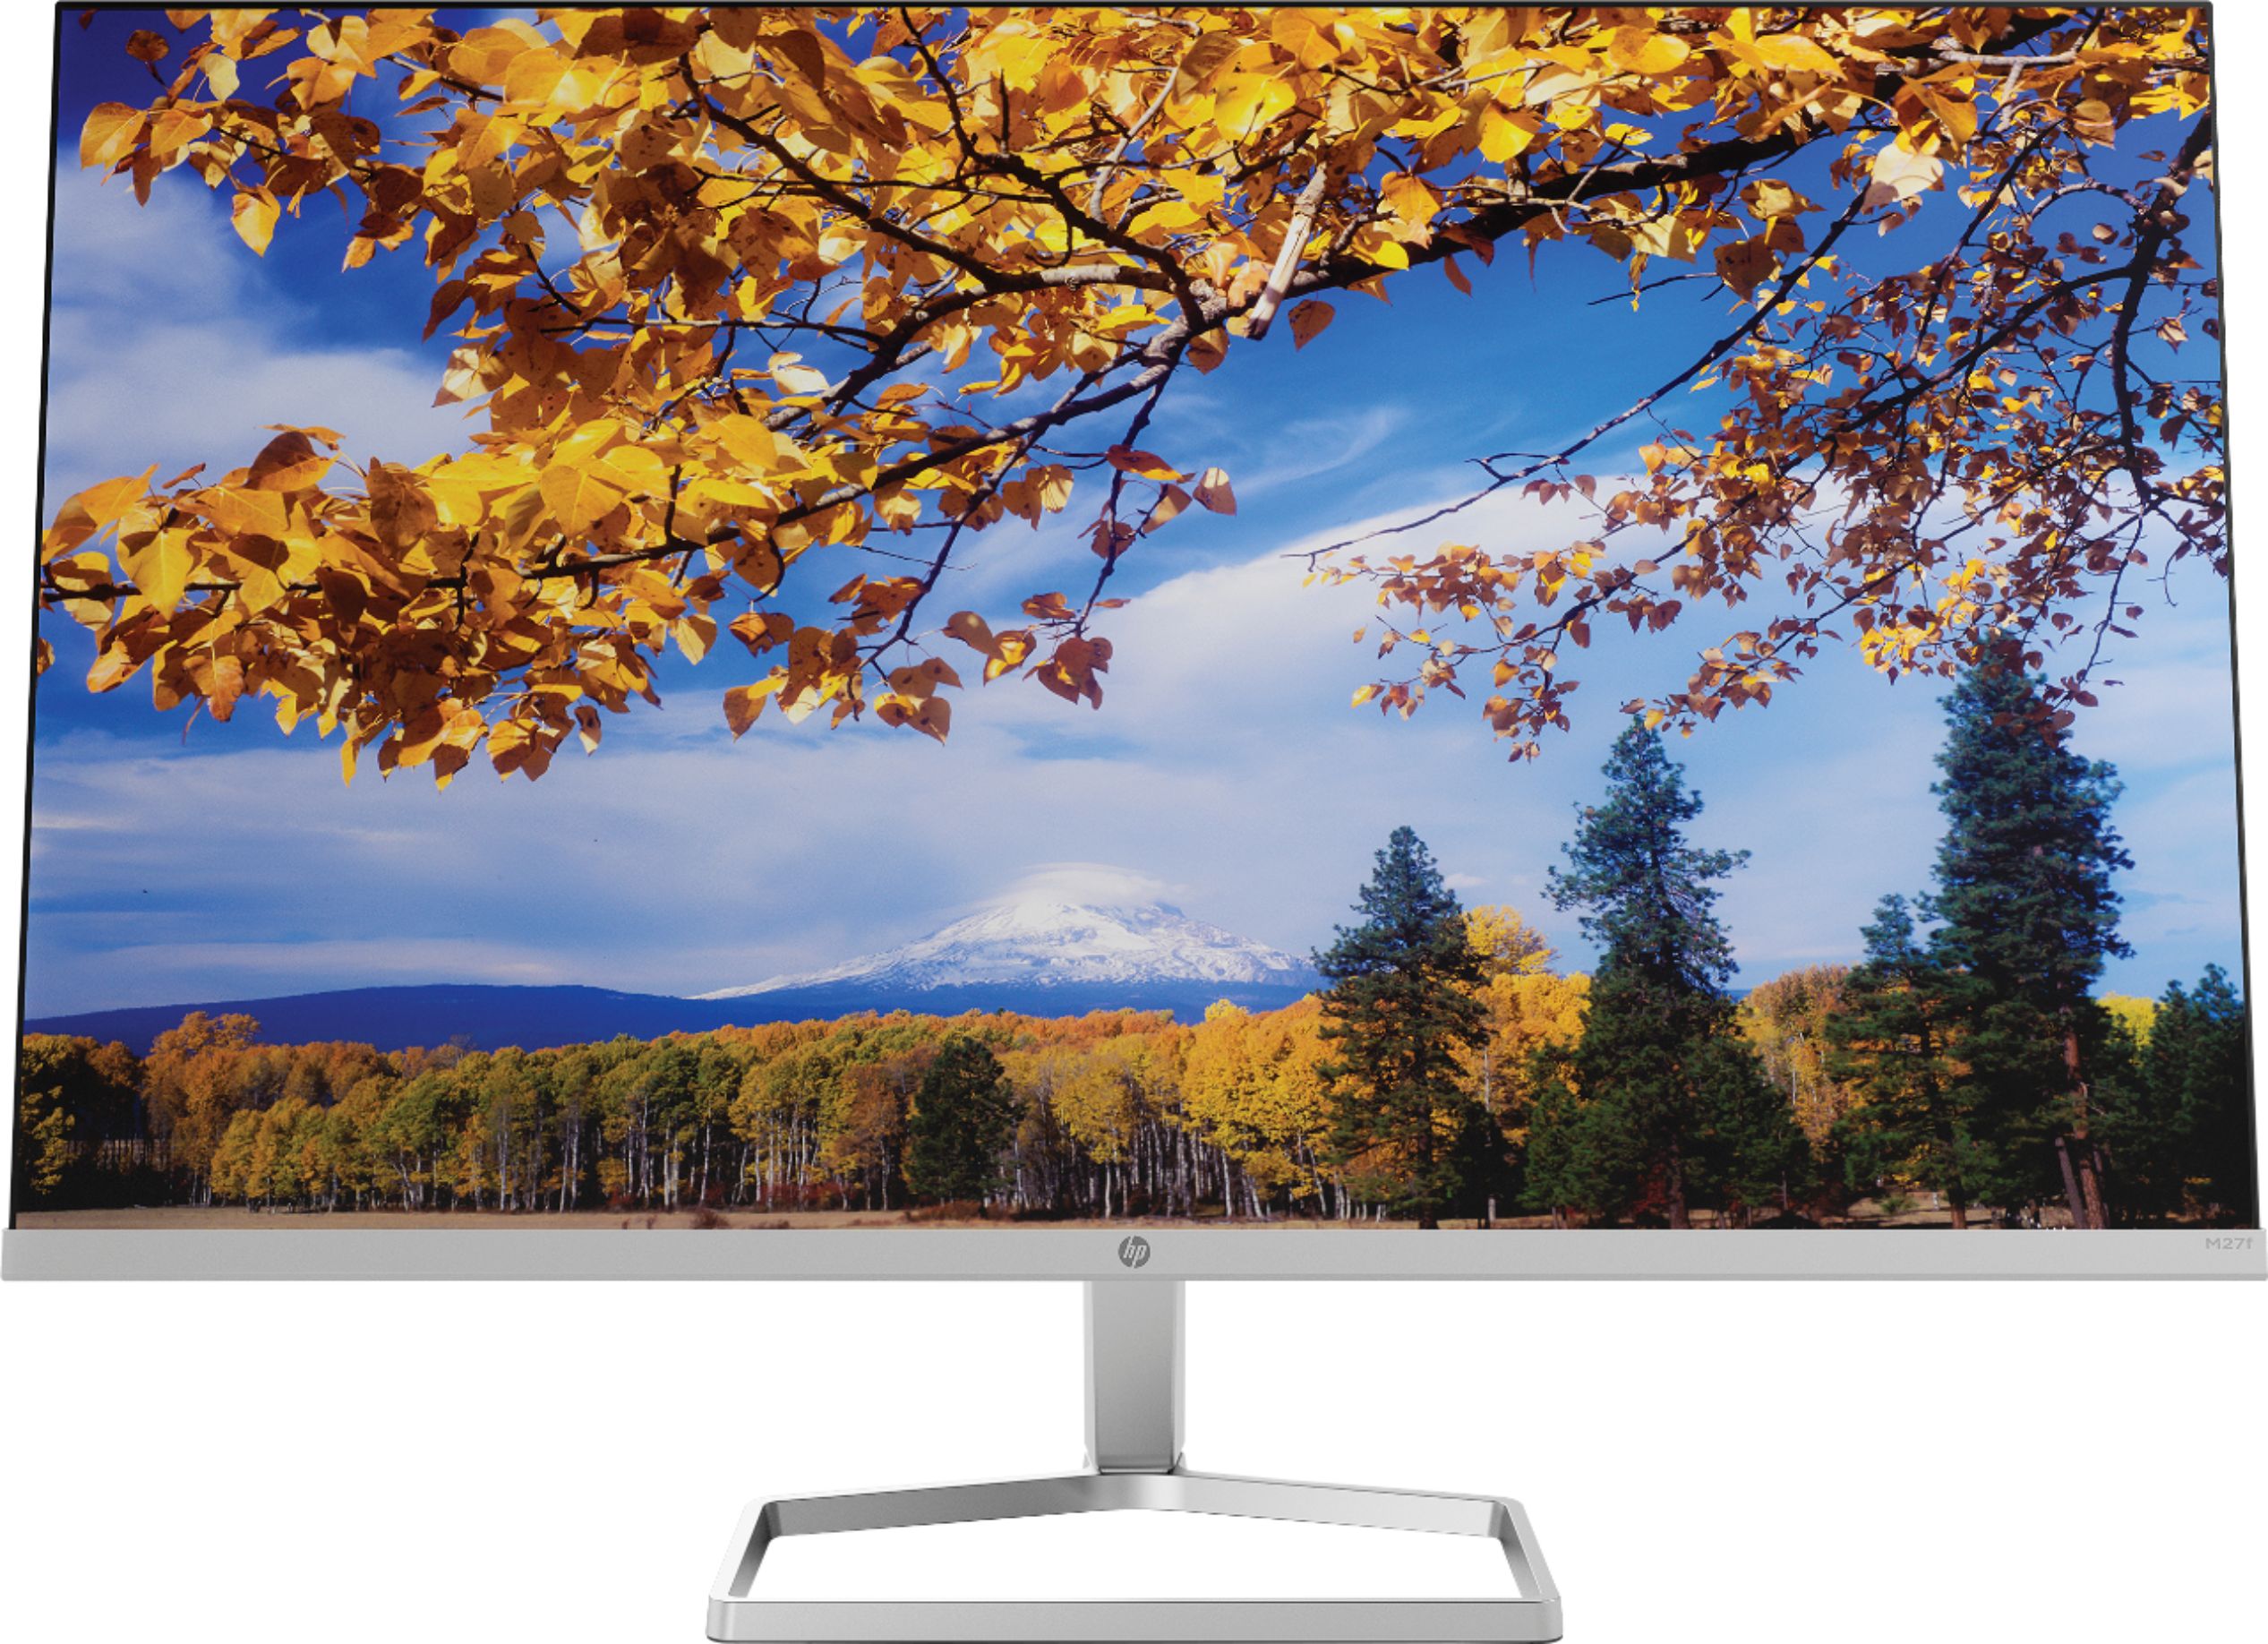 HP - 27" IPS LED FHD FreeSync Monitor (2 x HDMI, VGA) - Silver and Black $129.99